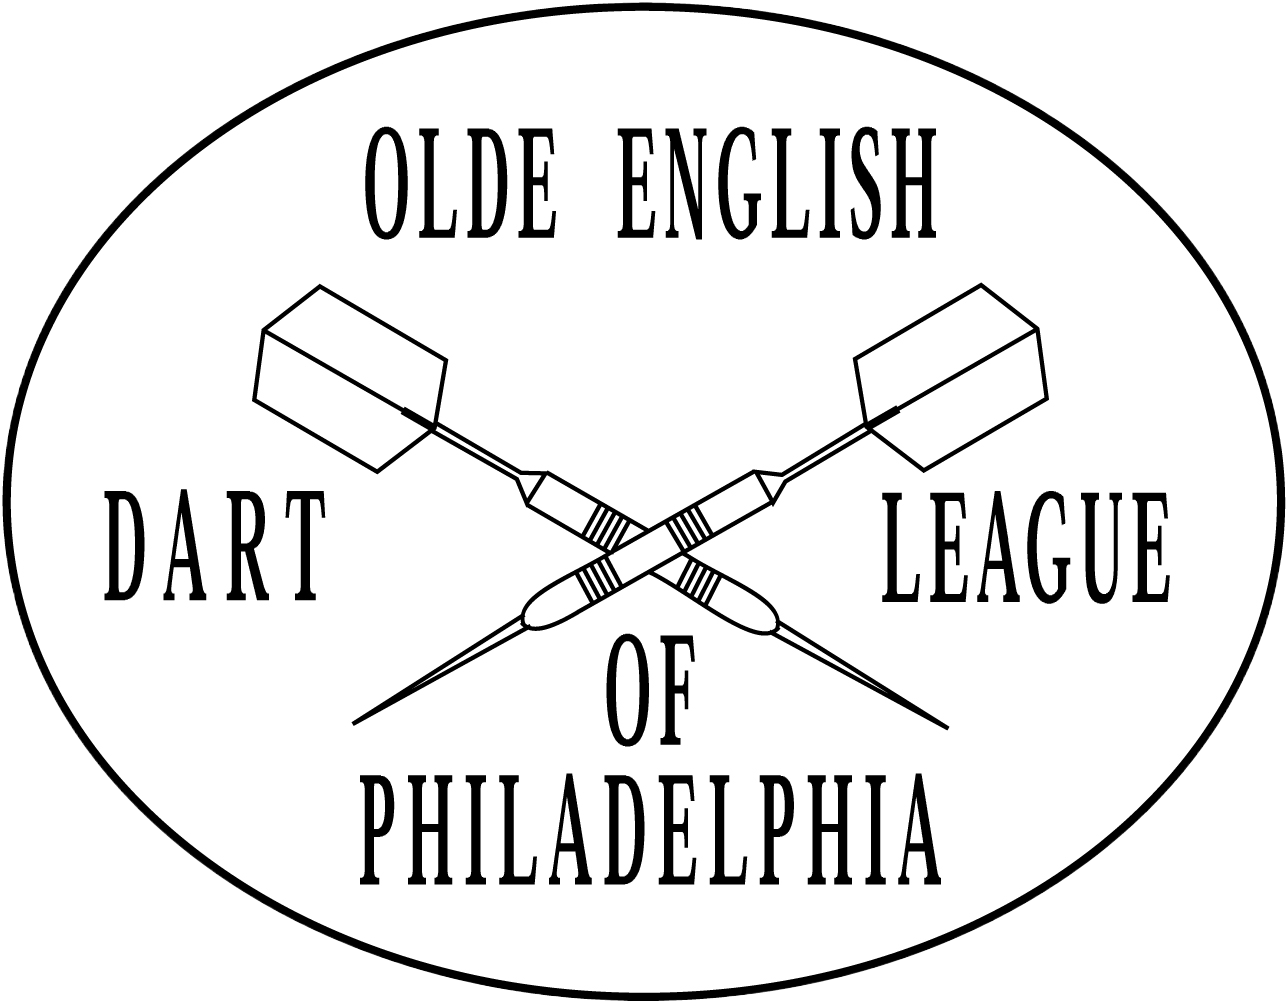 Old english dart league of philadelphia.